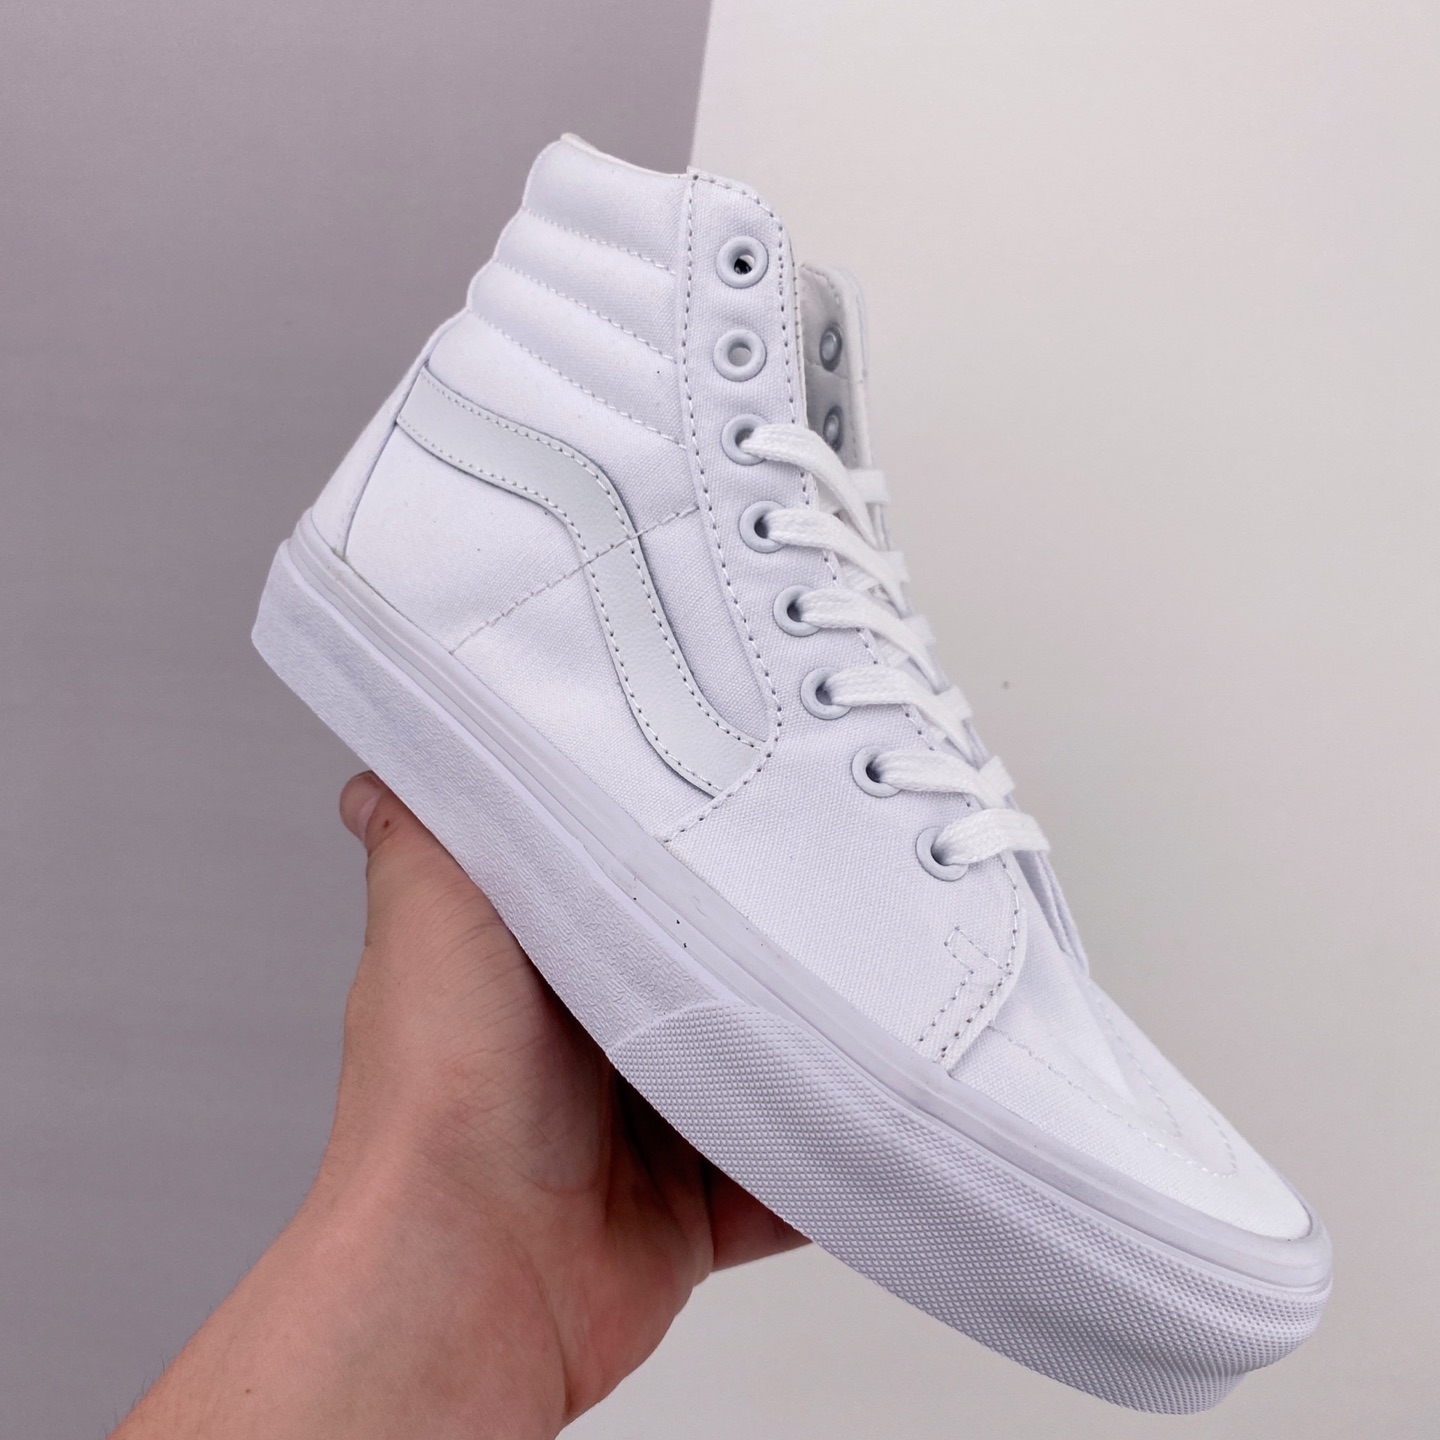 Vans Canvas Sk8-Hi Mono White - Stylish Canvas Sneakers